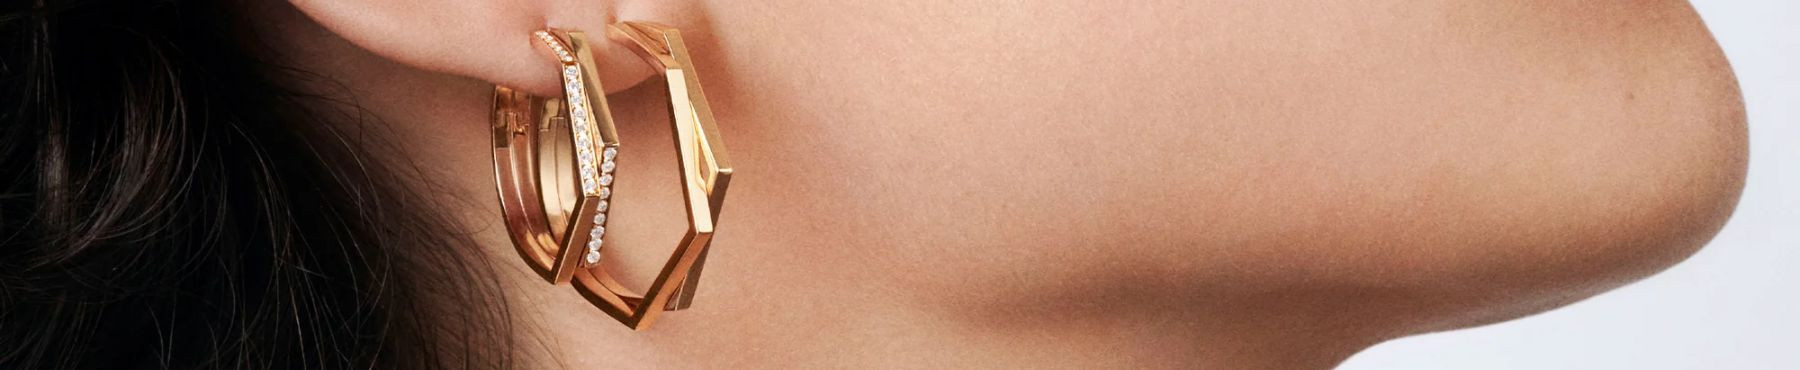 Repossi earrings